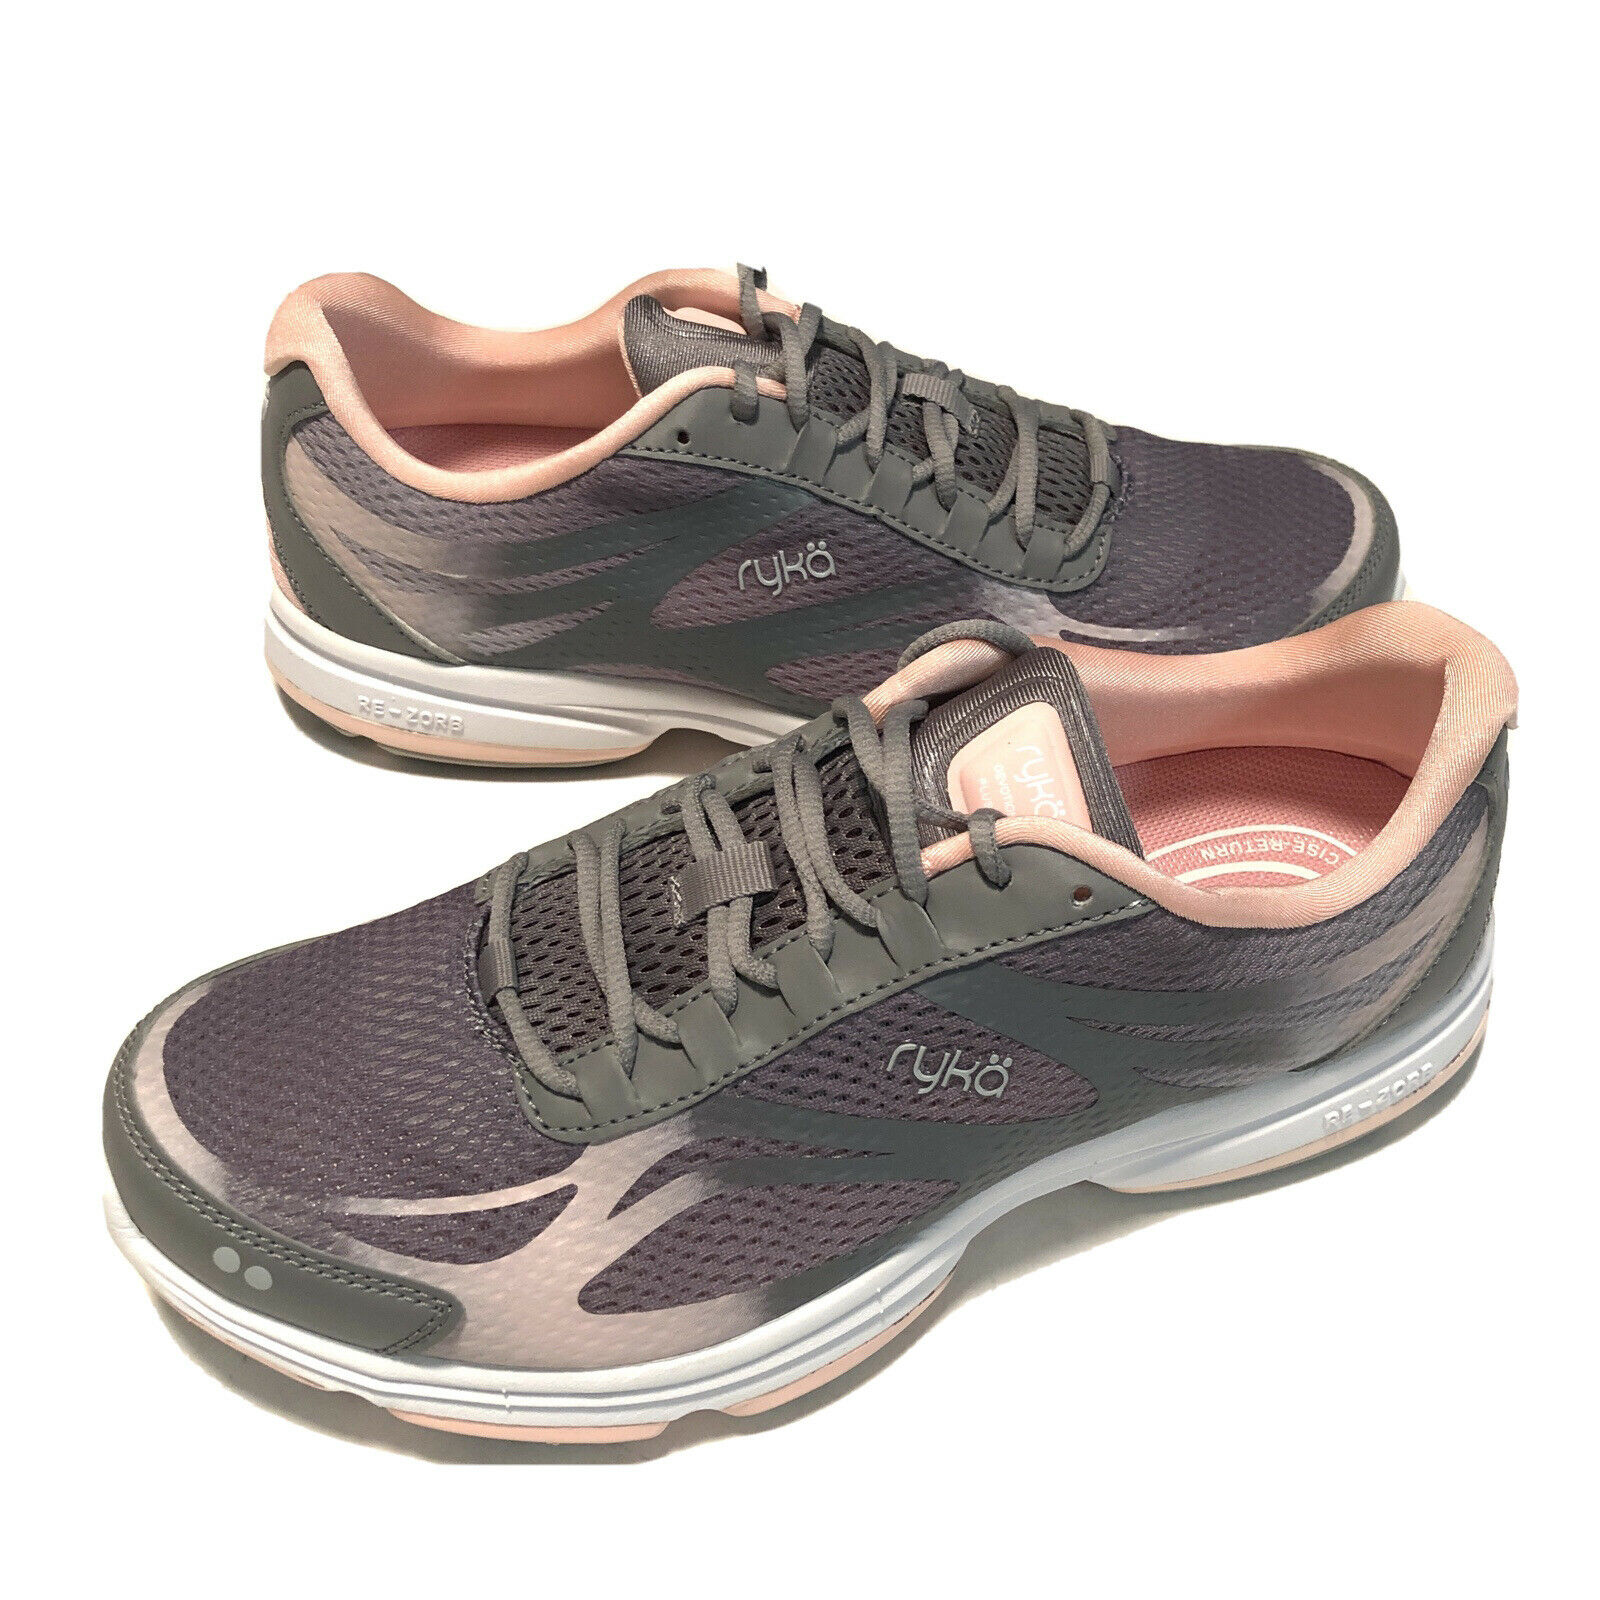 Ryka Devo Plus 2 Gray Pink Walking Shoes Athletic Women’s Size 7